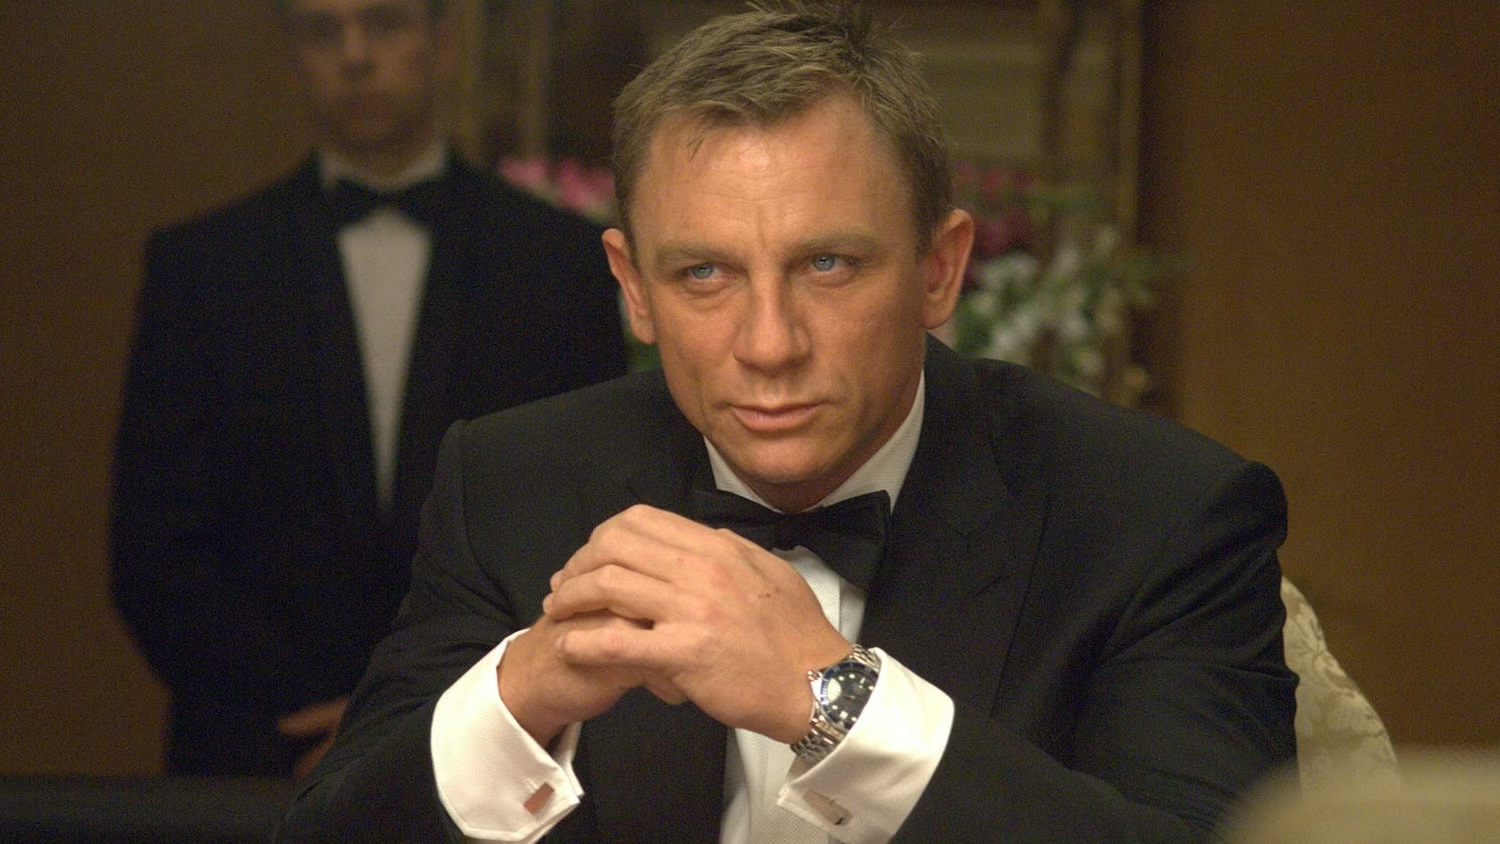 Daniel Craig during a pivotal scene in Casino Royale